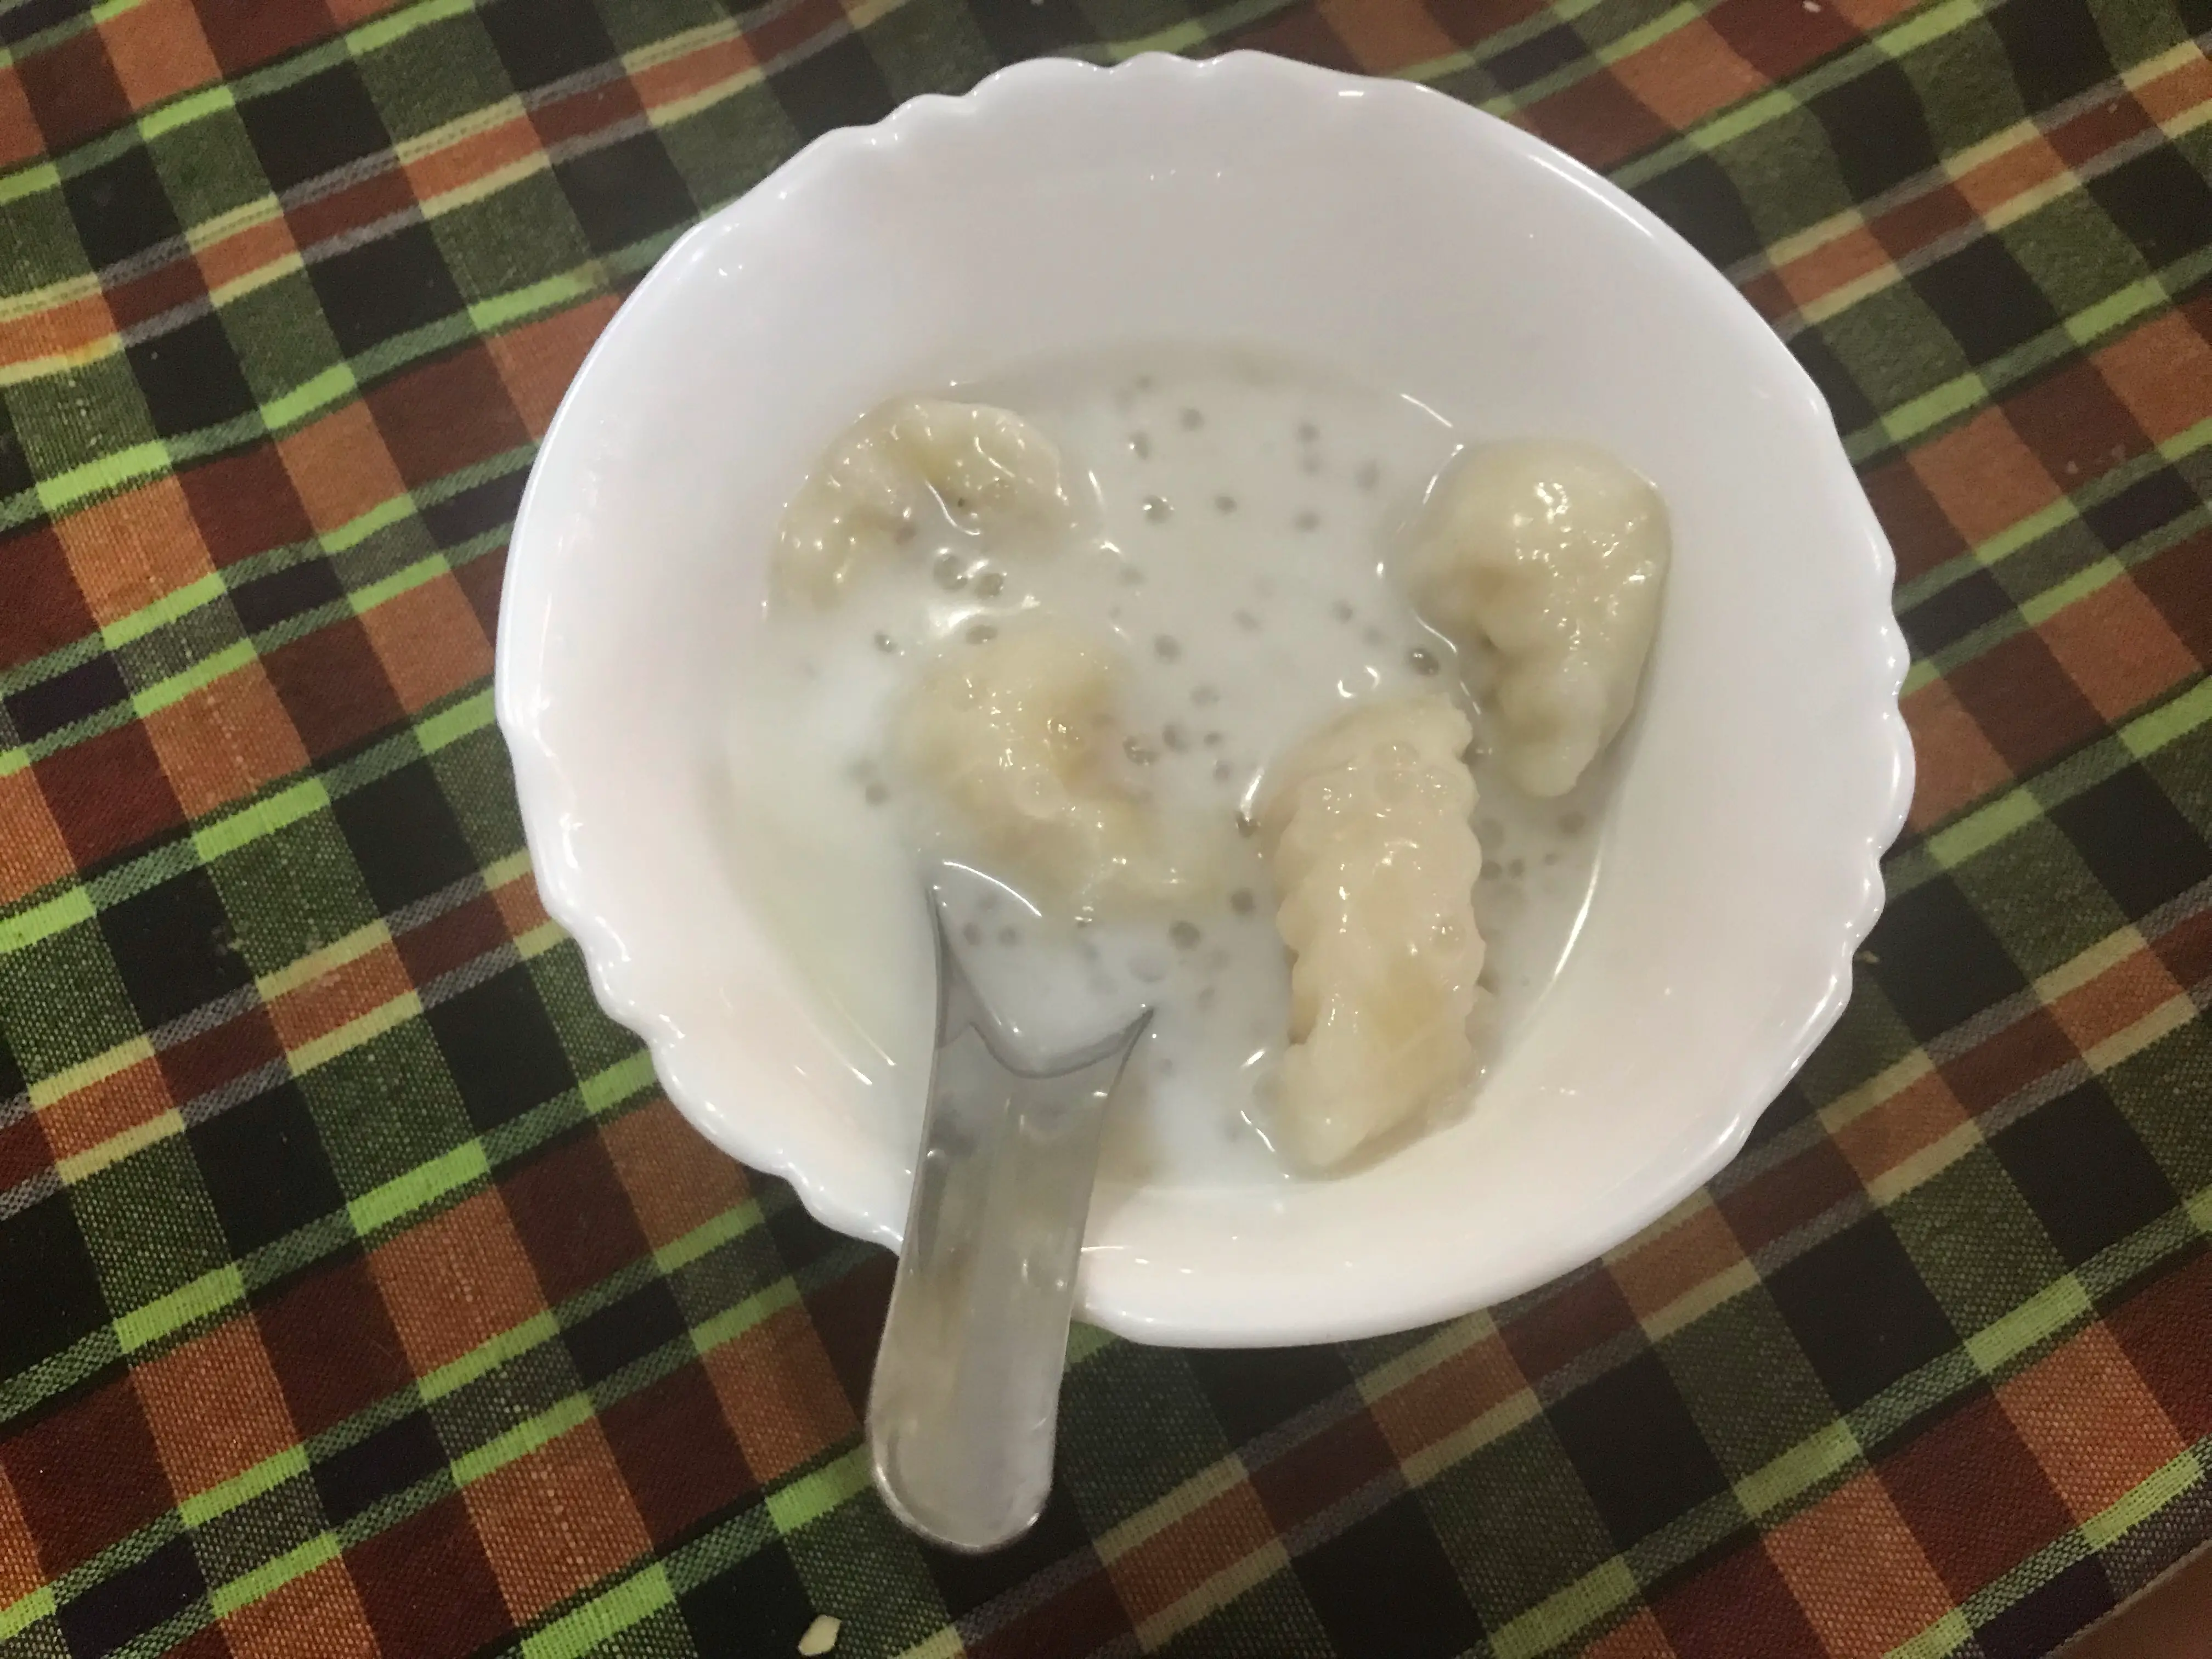 Banana and tapioca pudding, Battambang, Cambodia 